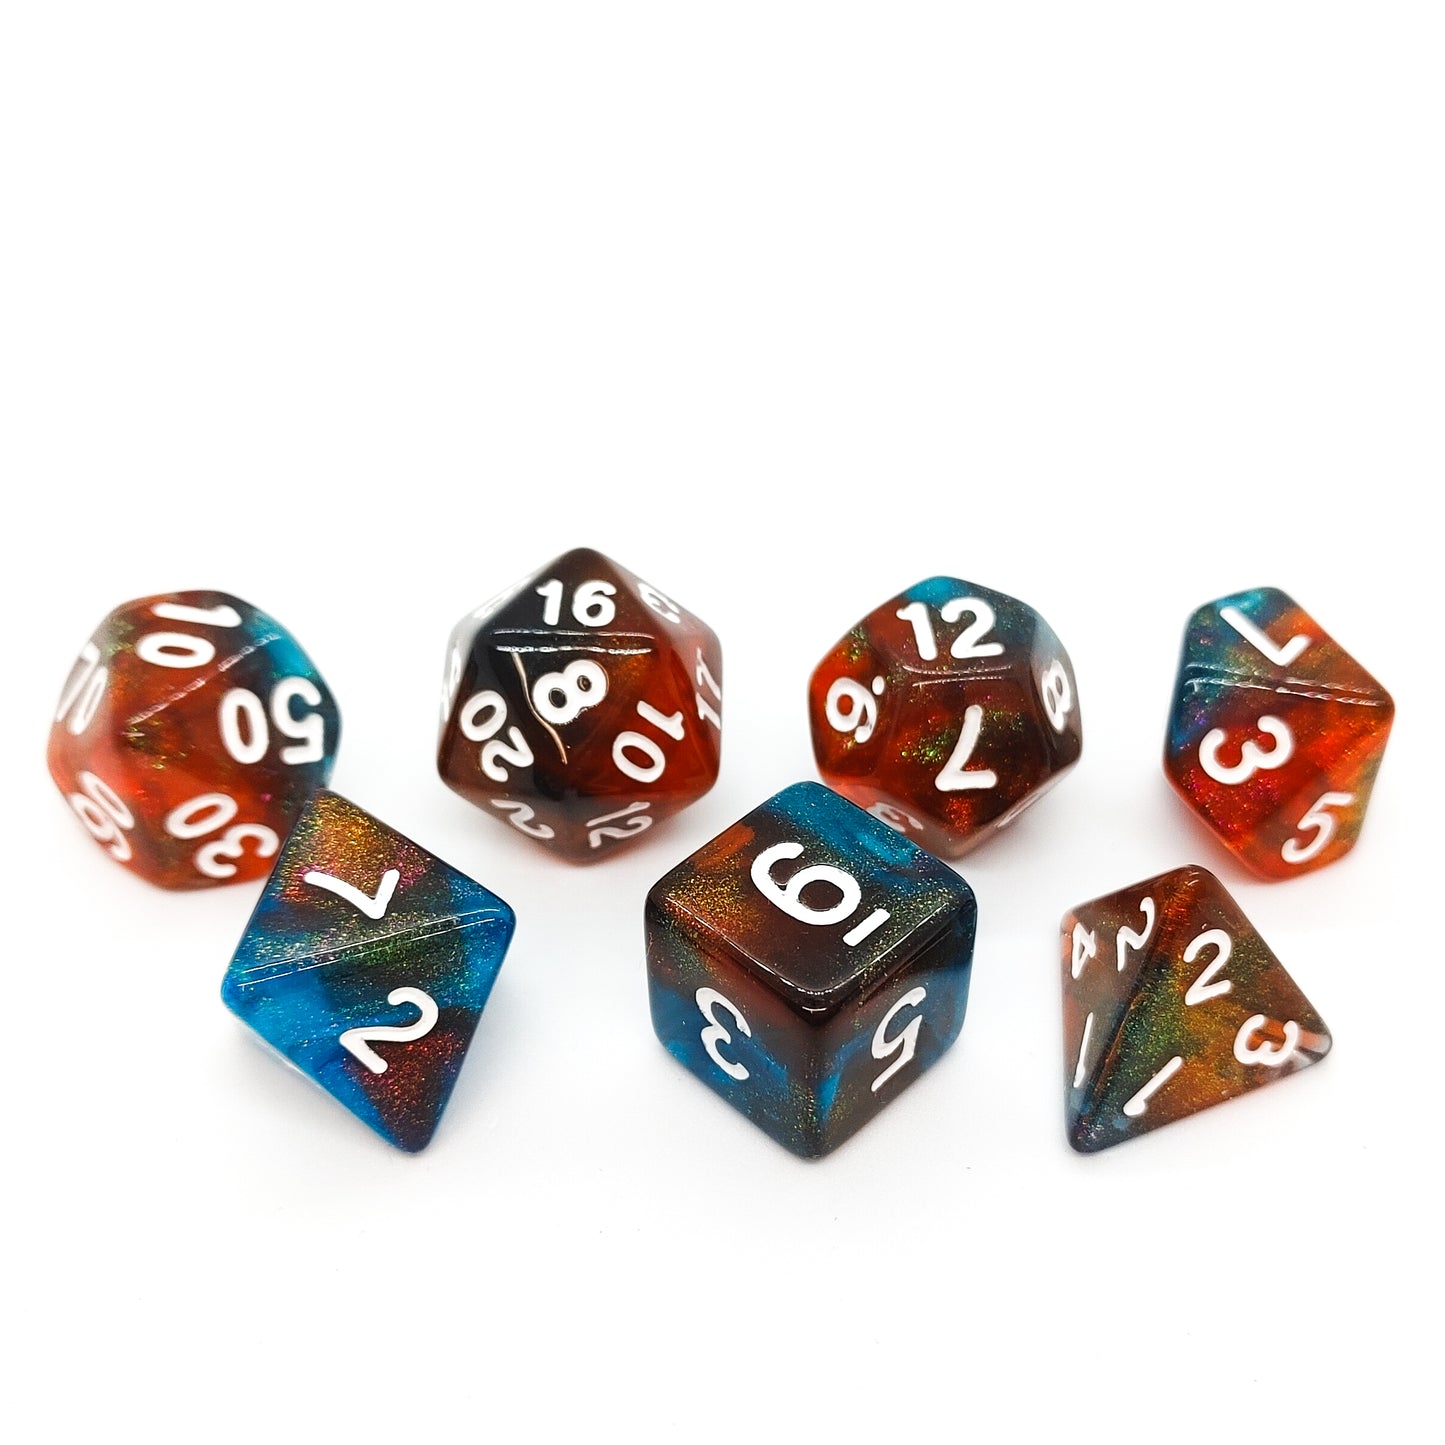 Fire and Ice - Iridescent dice set - 7 piece RPG dice set